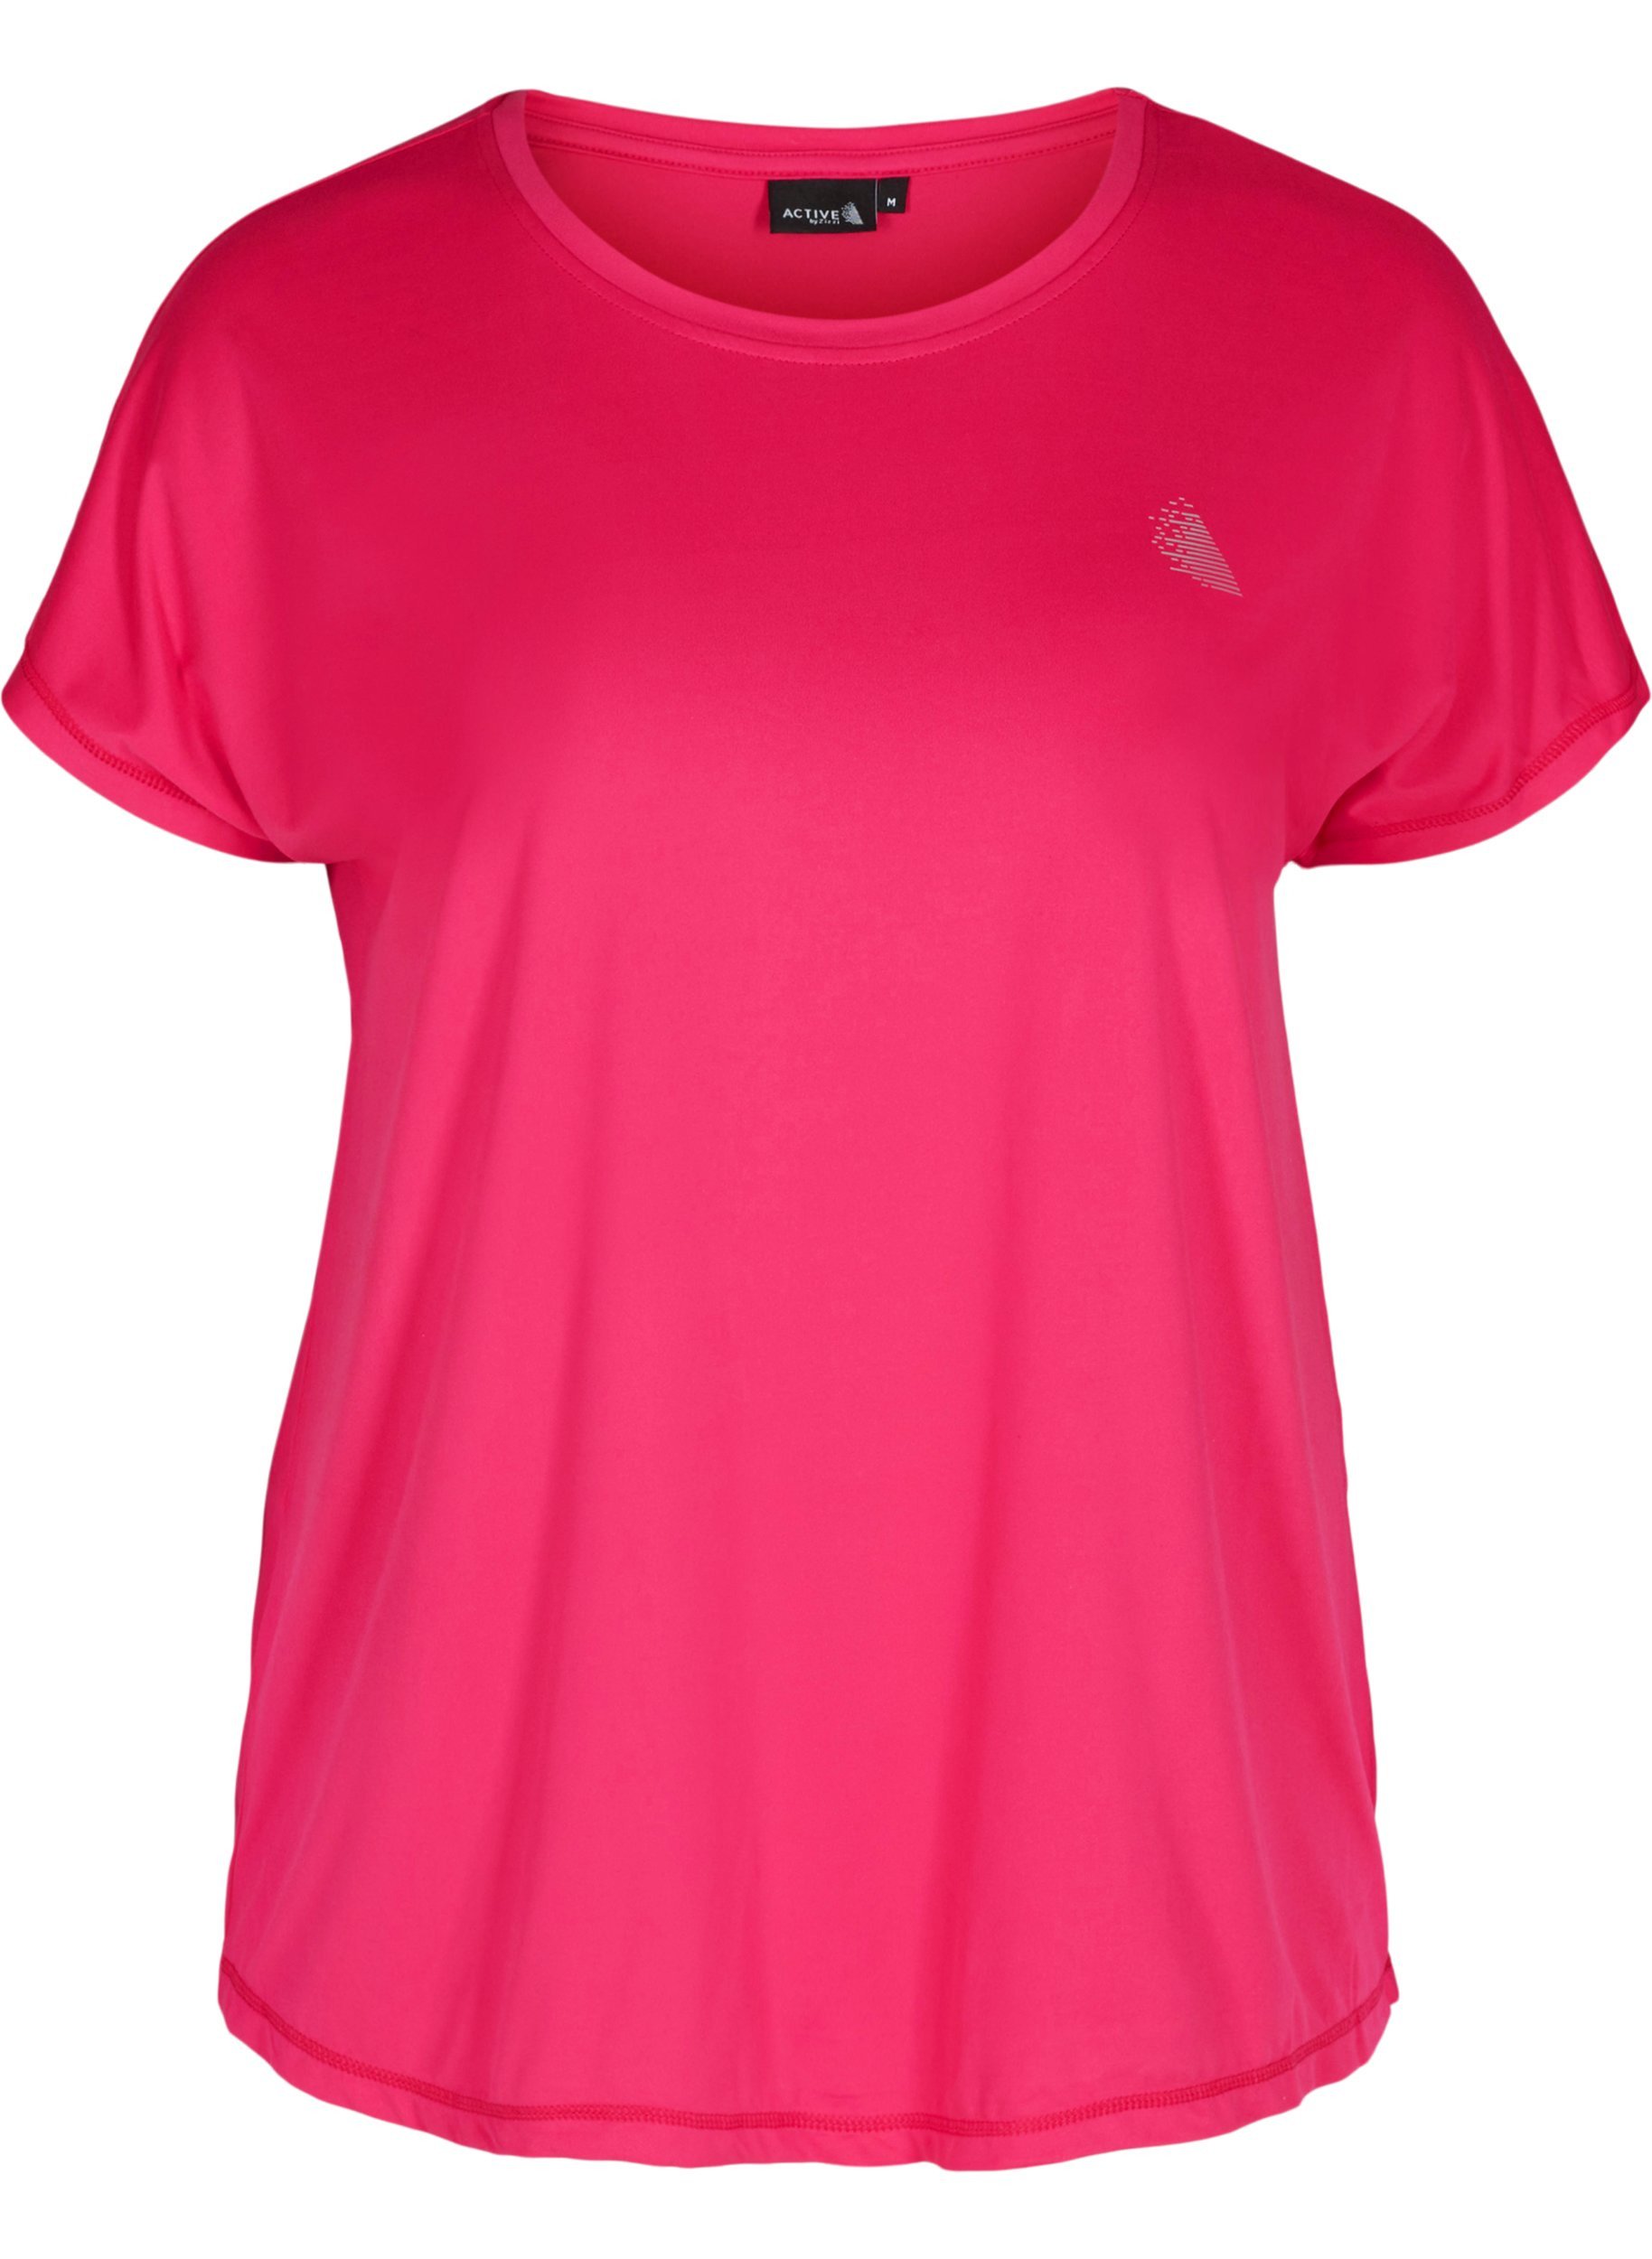 Ensfarvet trænings t-shirt, Pink Peacock